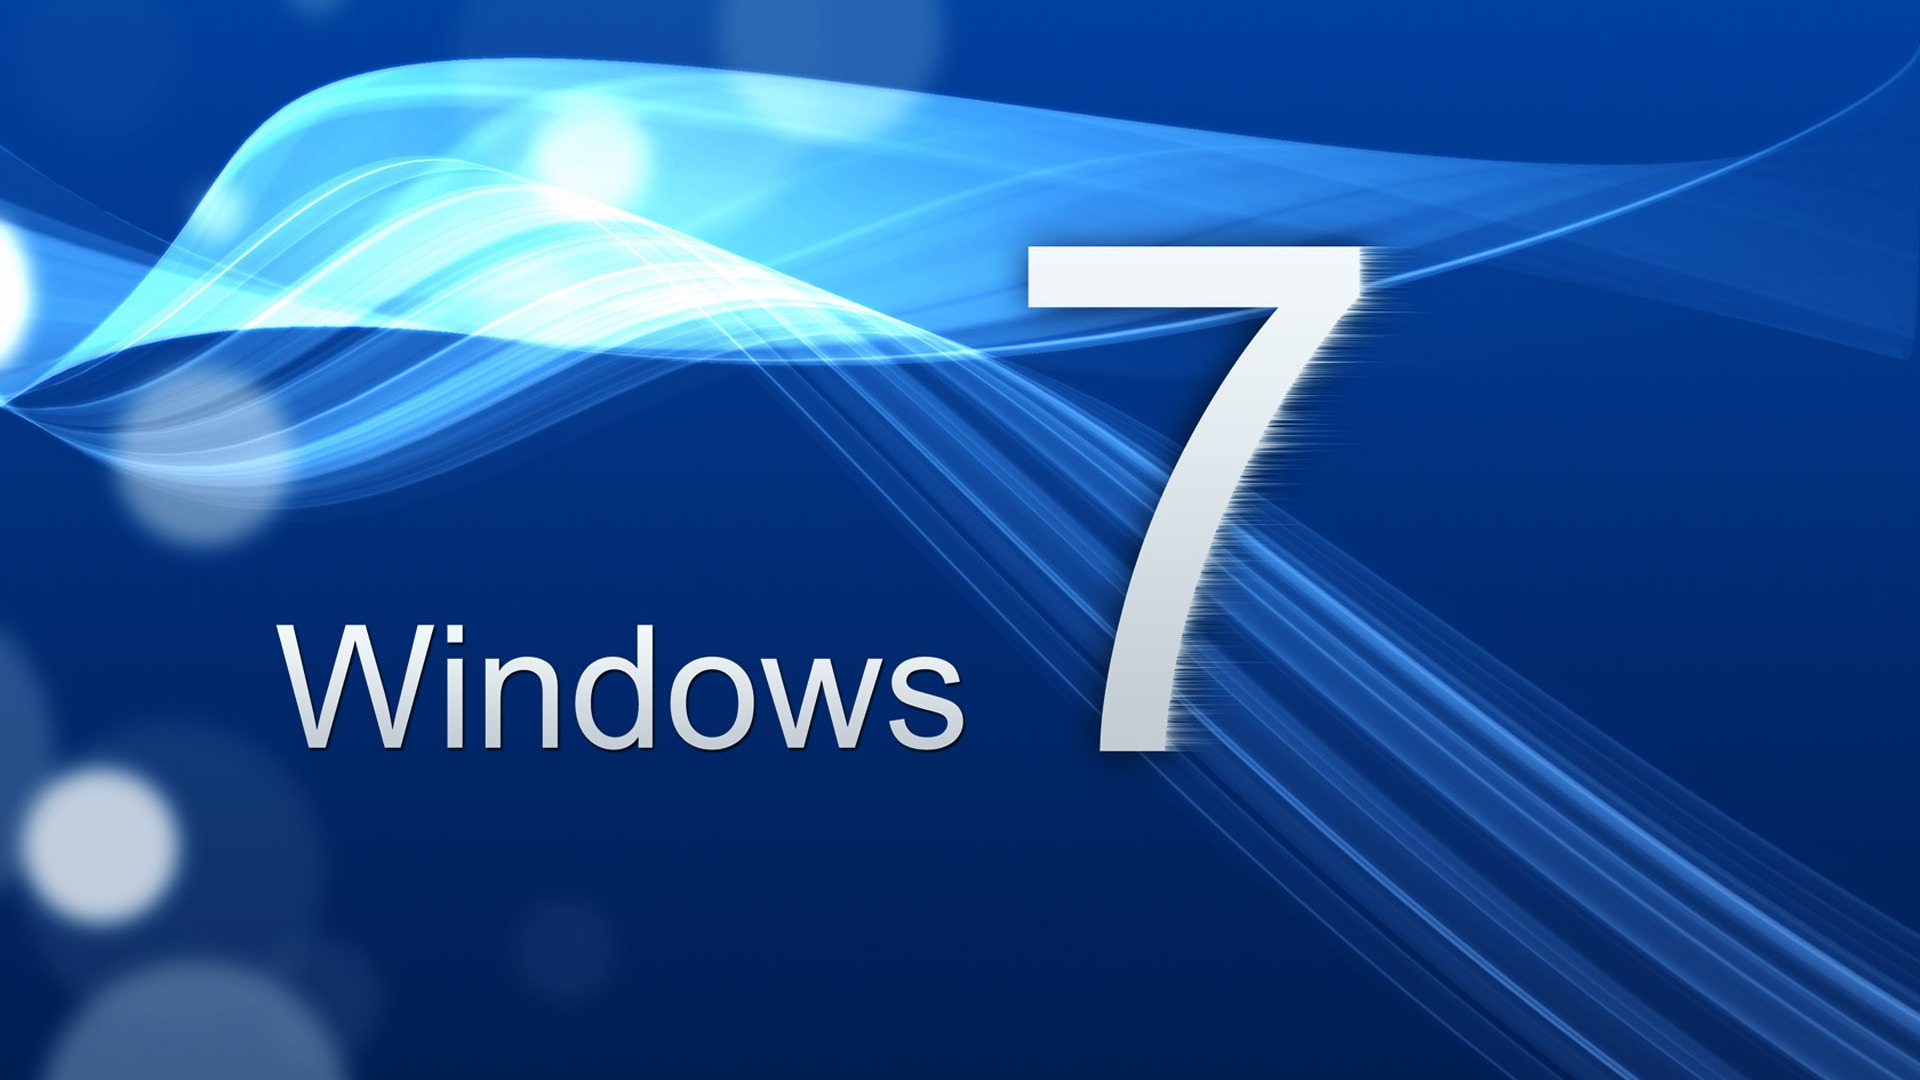  Windows7のテーマの壁紙(2) #1 - 1920x1080